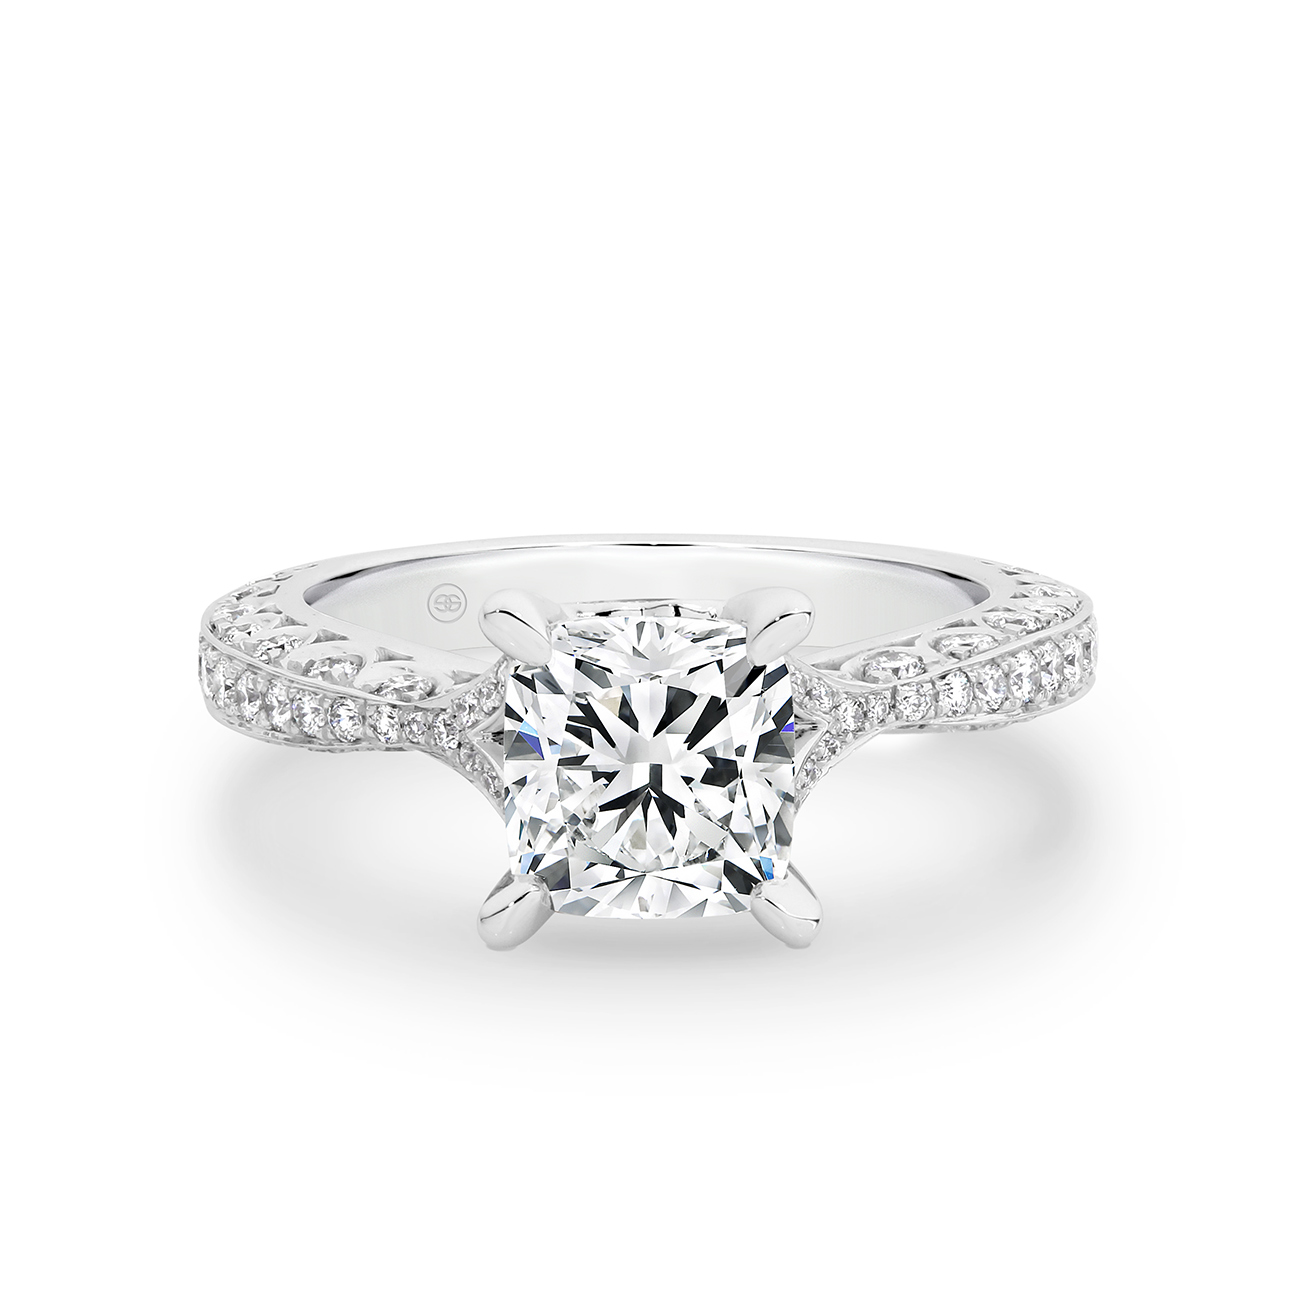 Cushion Cut Diamond Band Engagement Ring